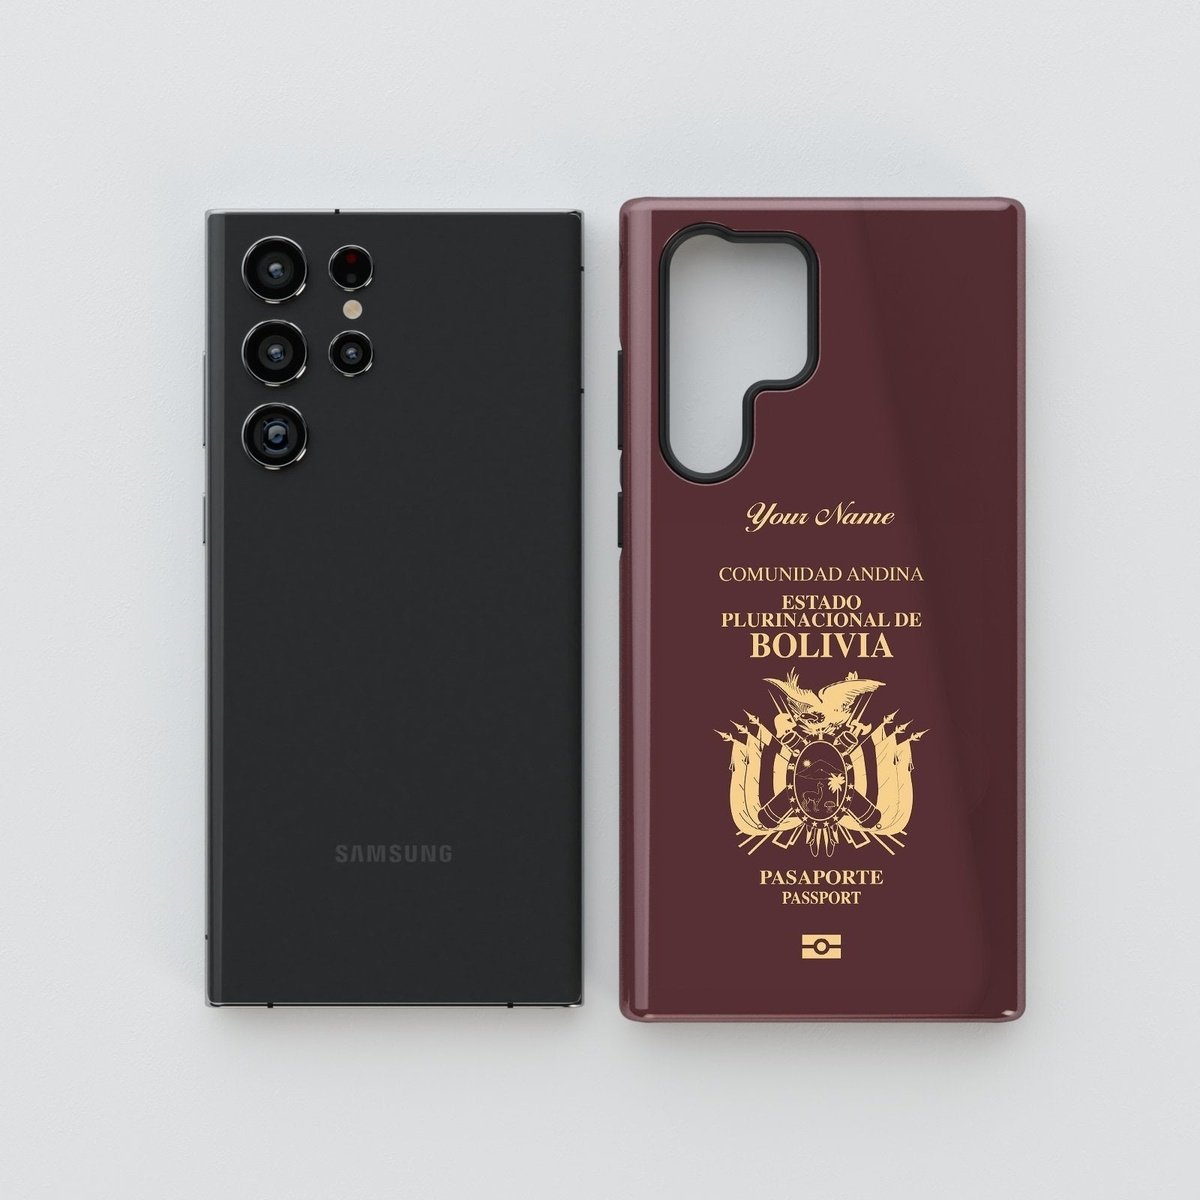 Bolivia Passport - Samsung Galaxy S Case